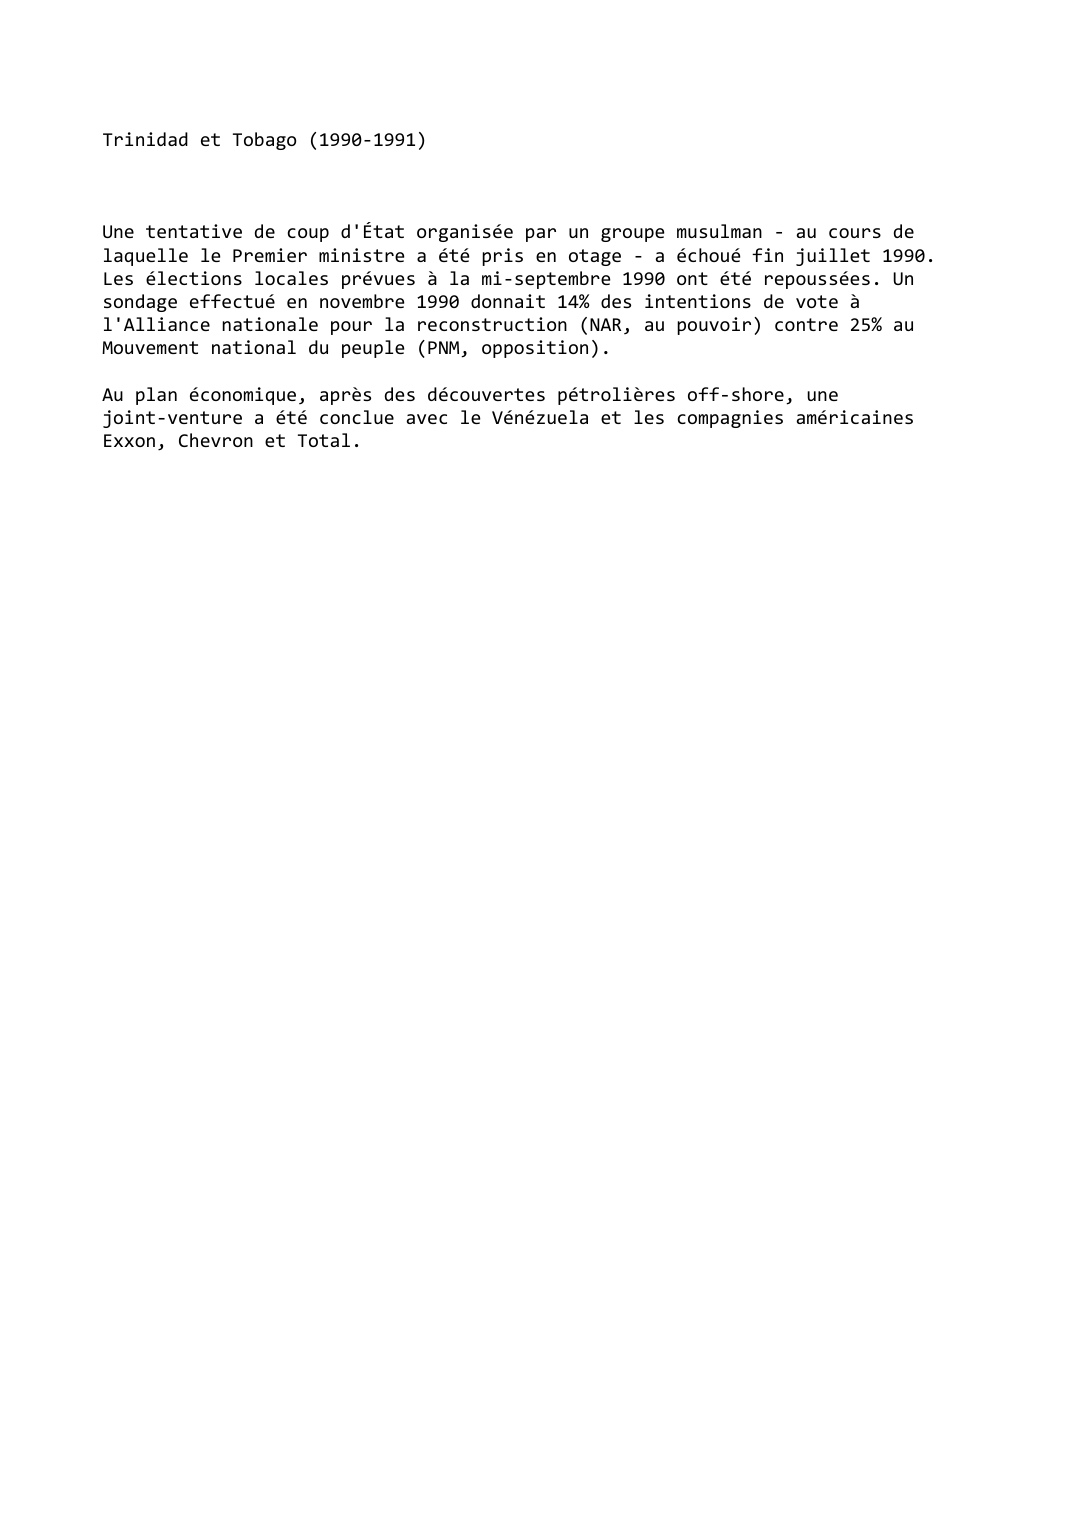 Prévisualisation du document Trinidad et Tobago (1990-1991)